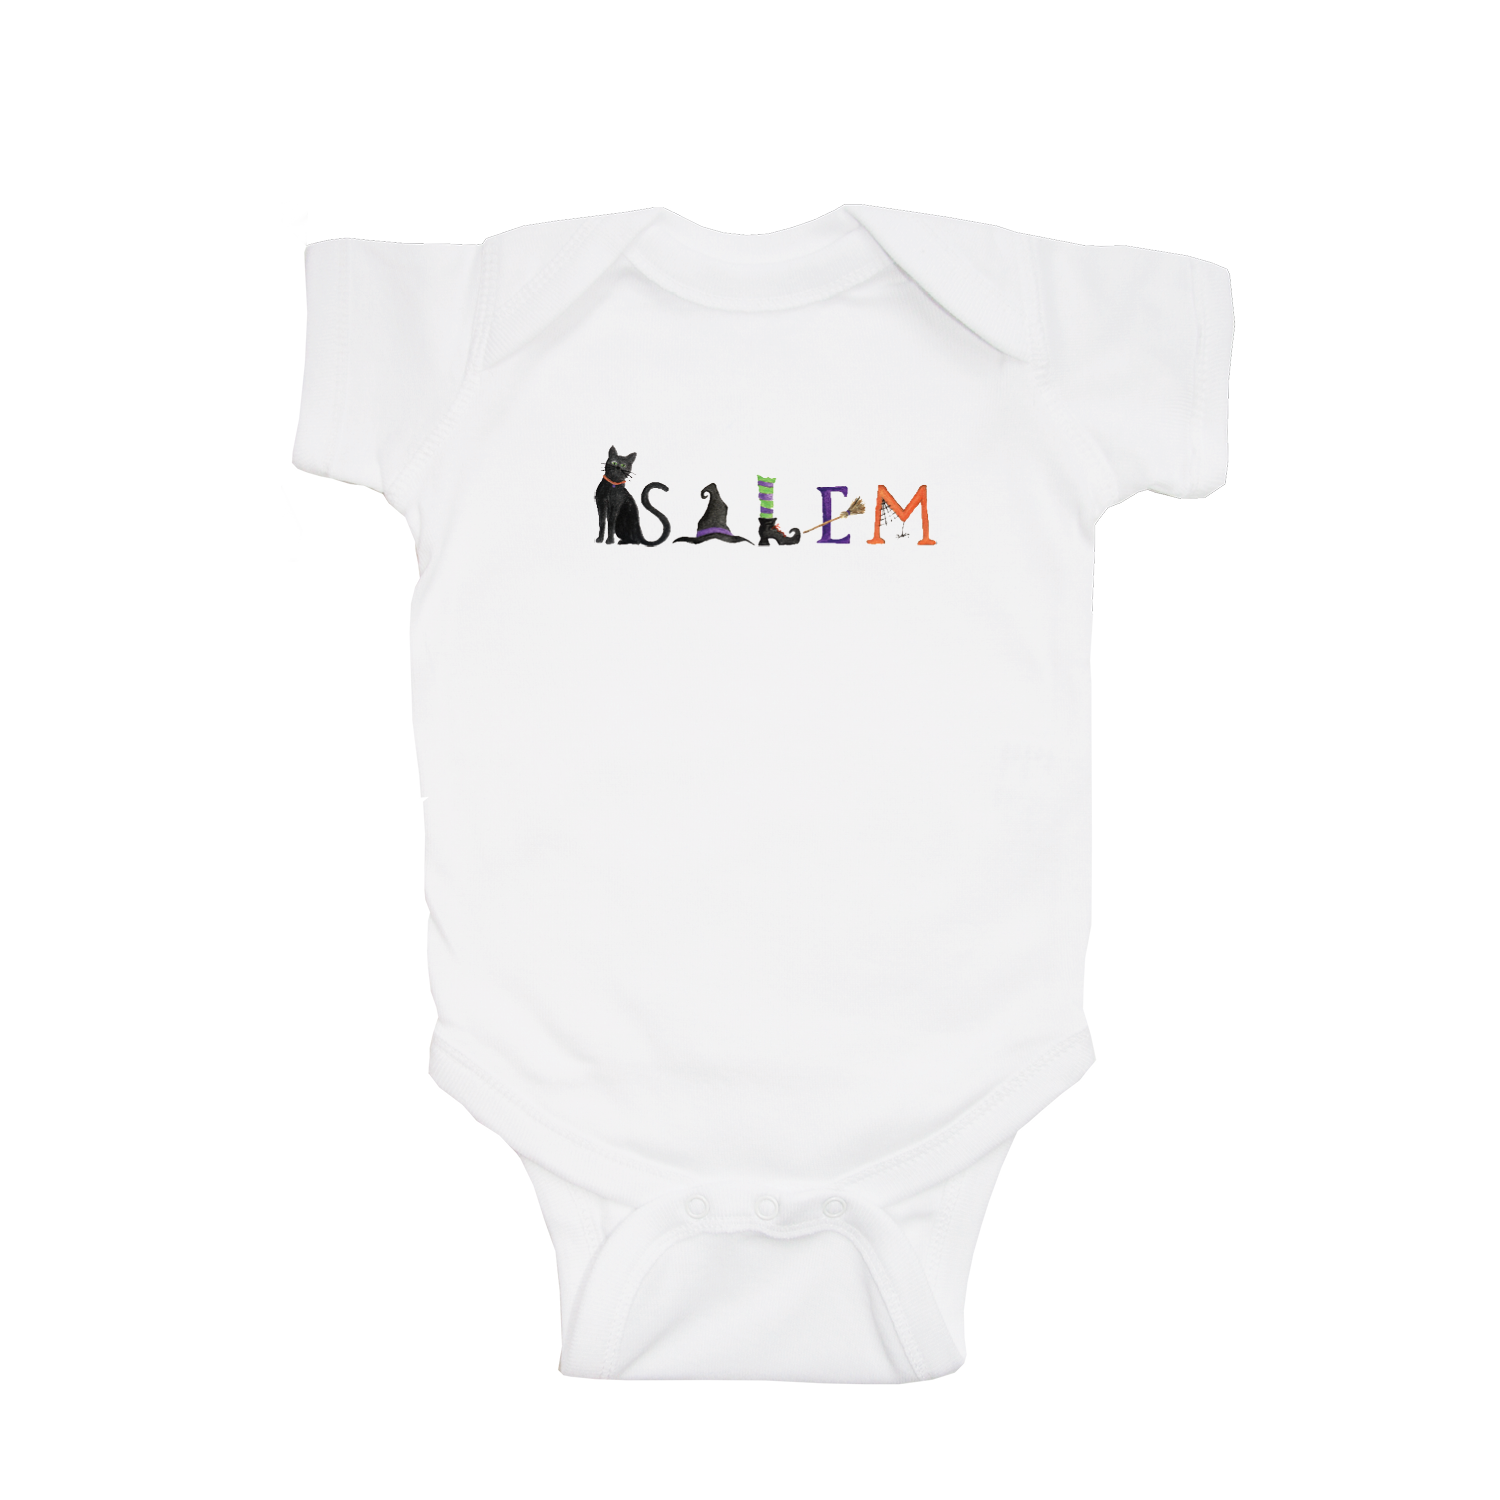 Salem baby snap up short sleeve